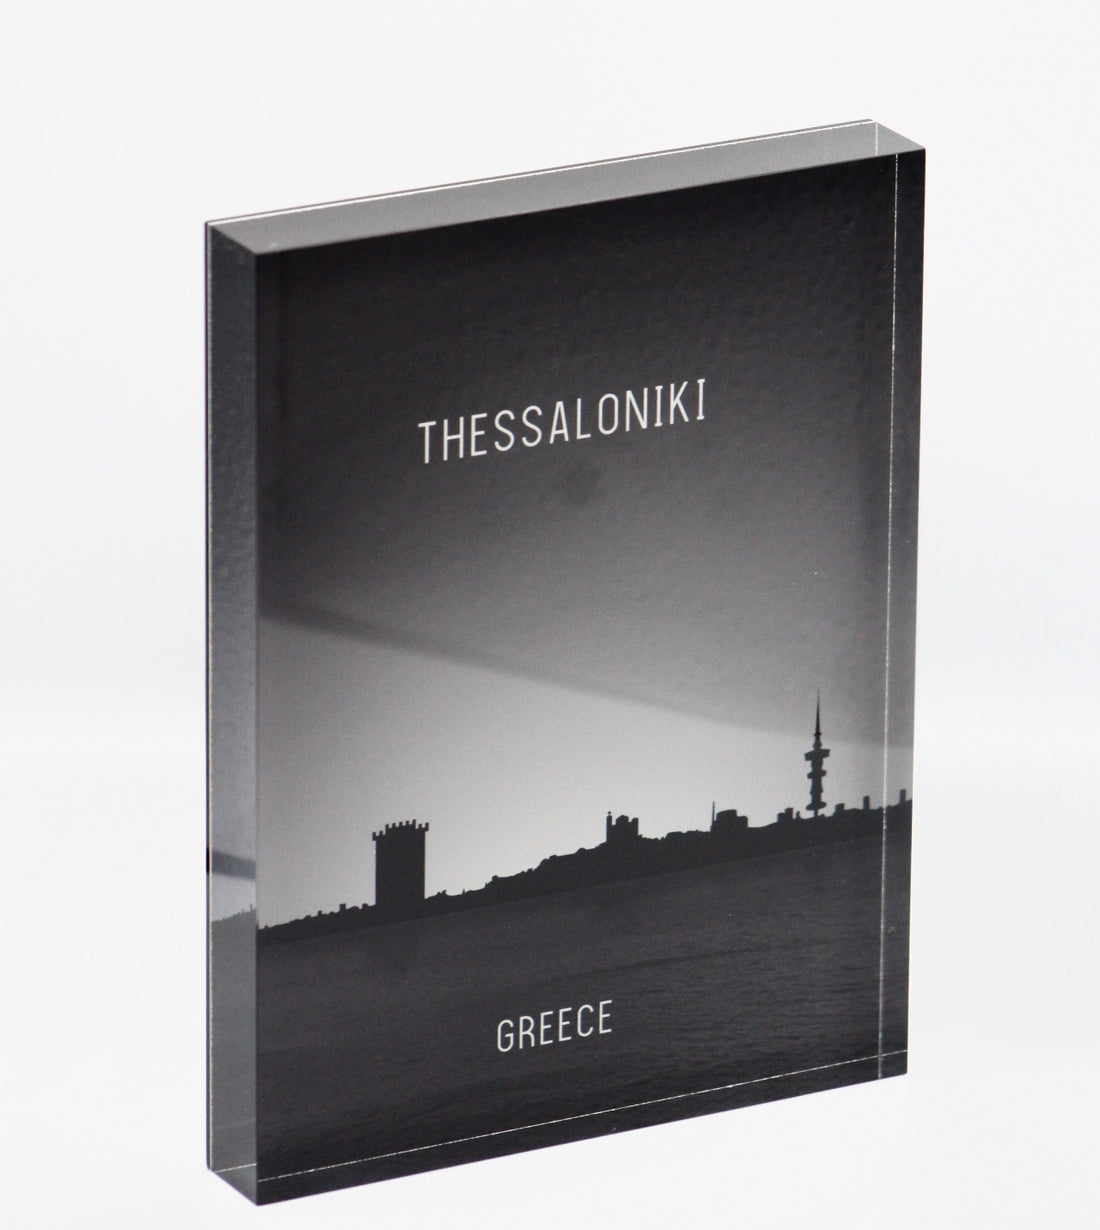 Thessaloniki skyline design object